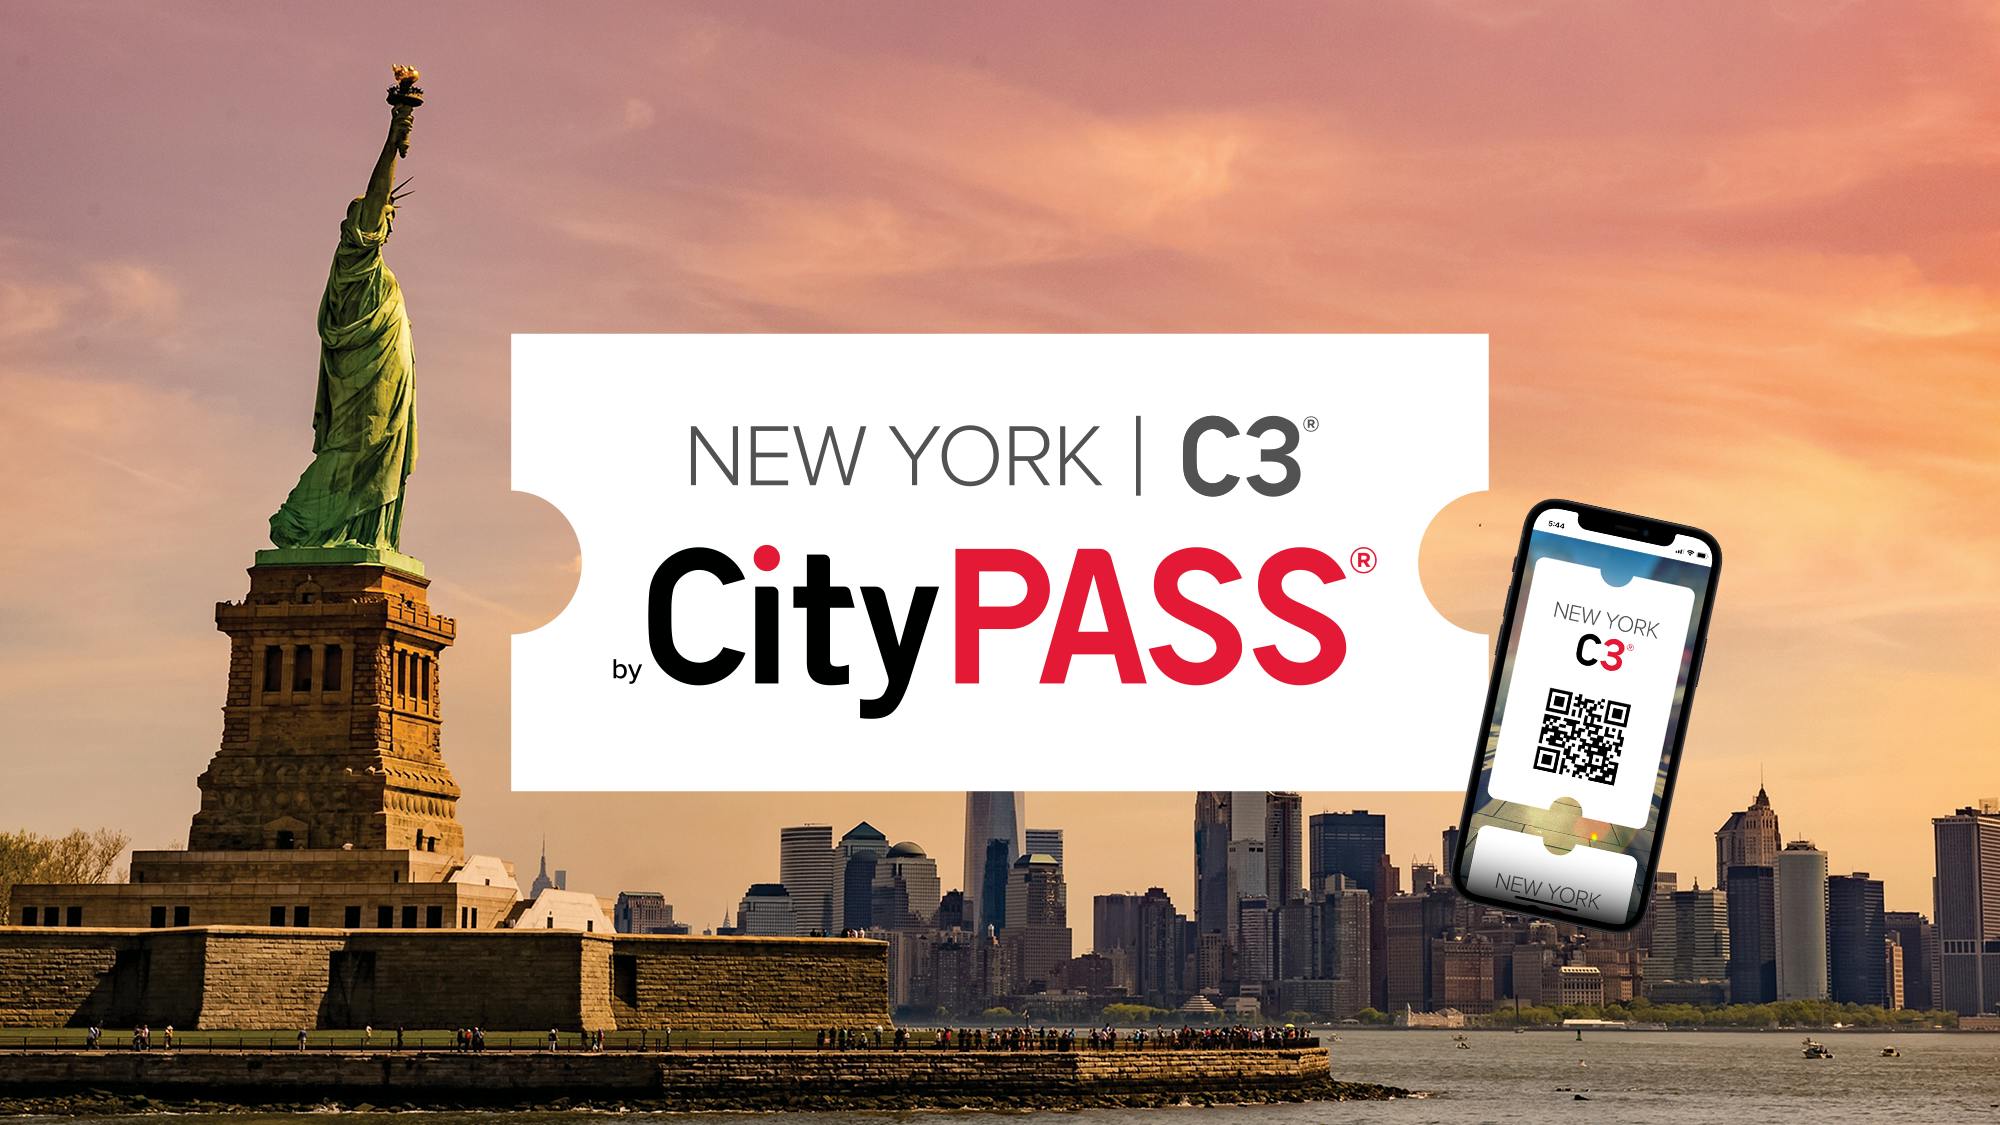 Tarjeta turística New York C3® CityPASS®